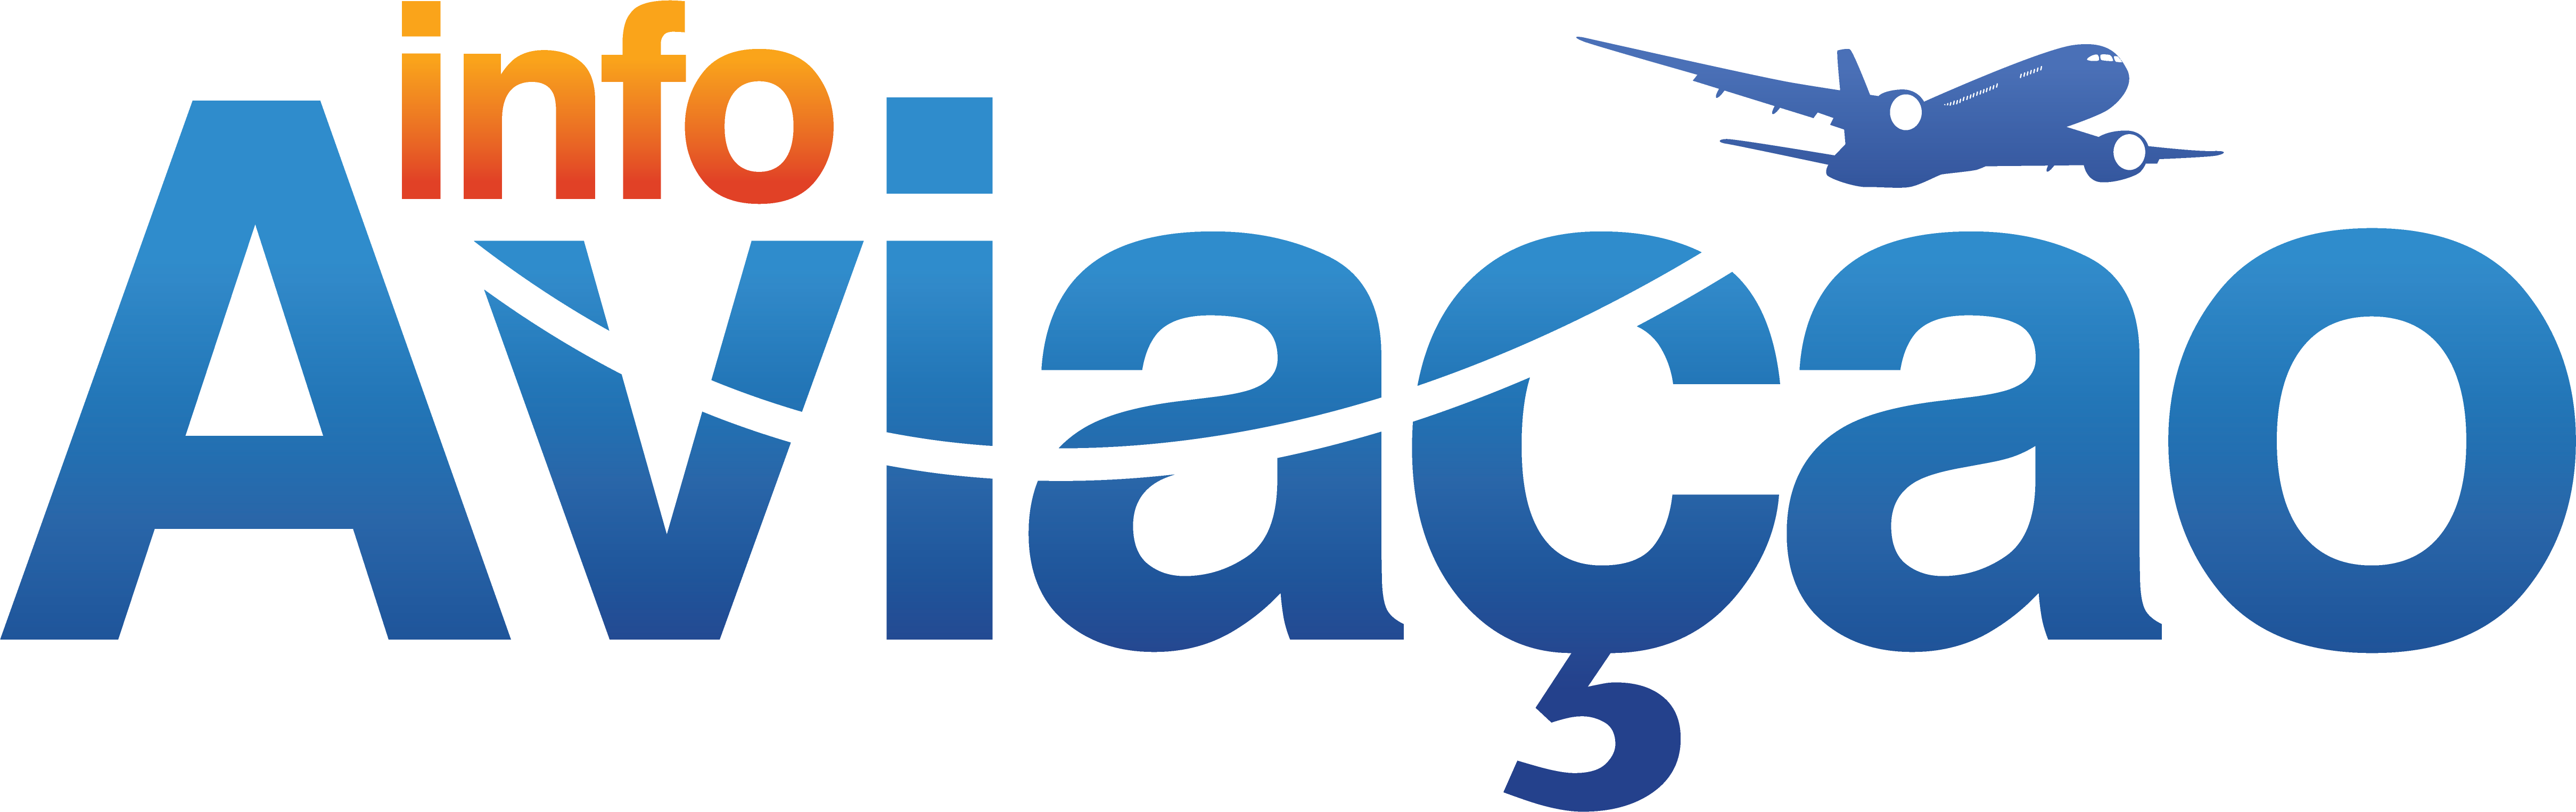 logo-info-aviacao-1